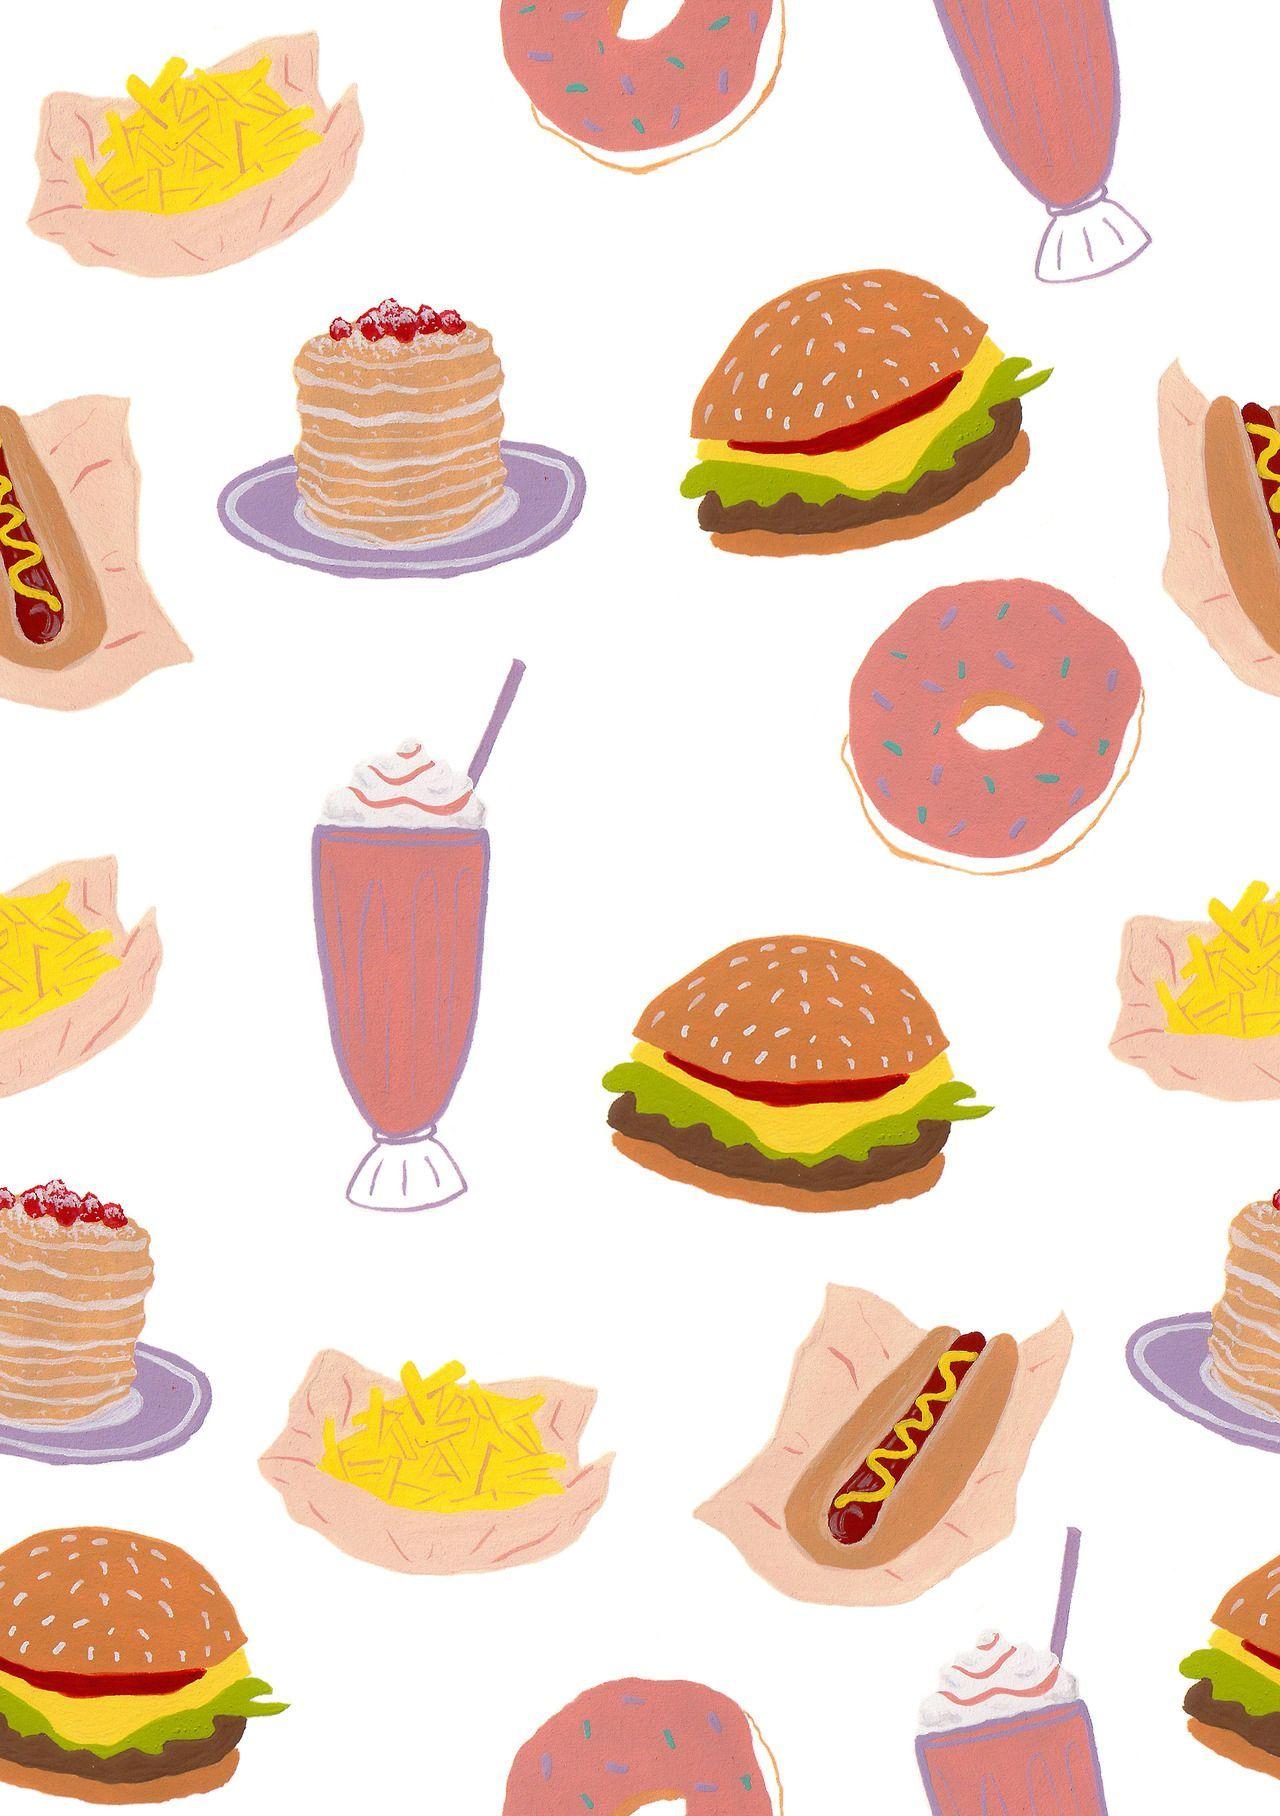 american diner food / cheeseburger, fries, hot dog, milkshake